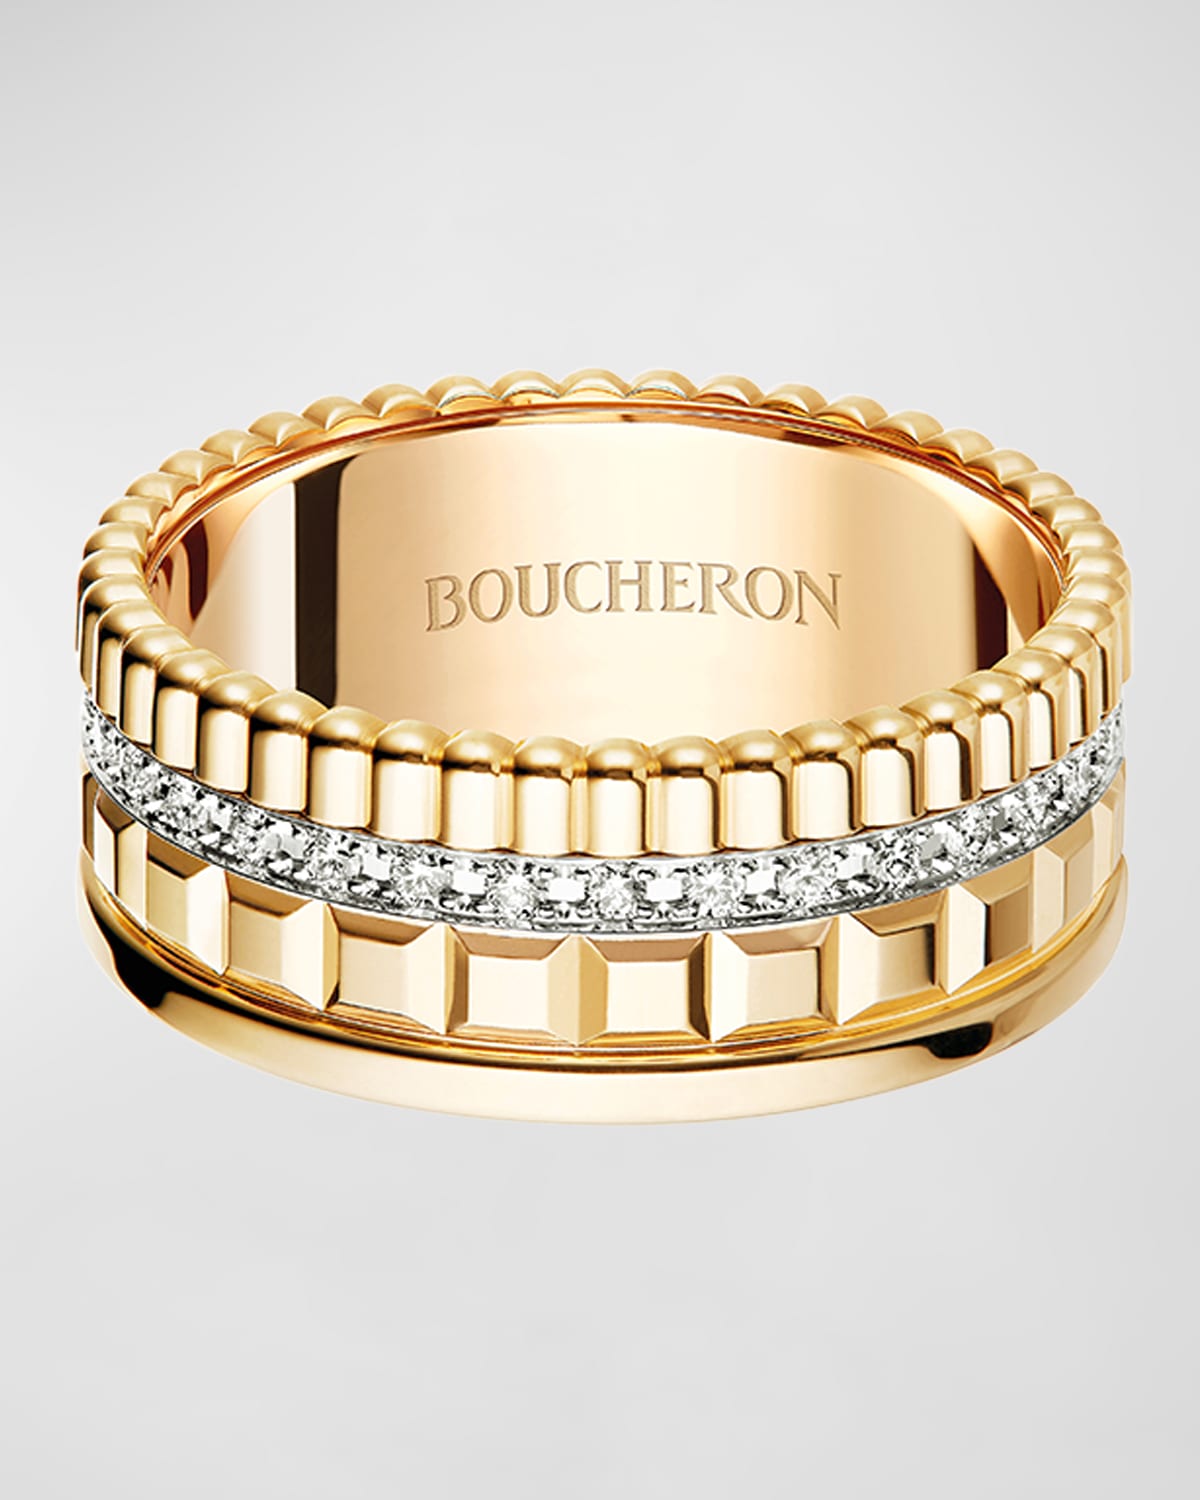 Boucheron Quatre Radiant Gold Band Ring with Diamonds, Size 51